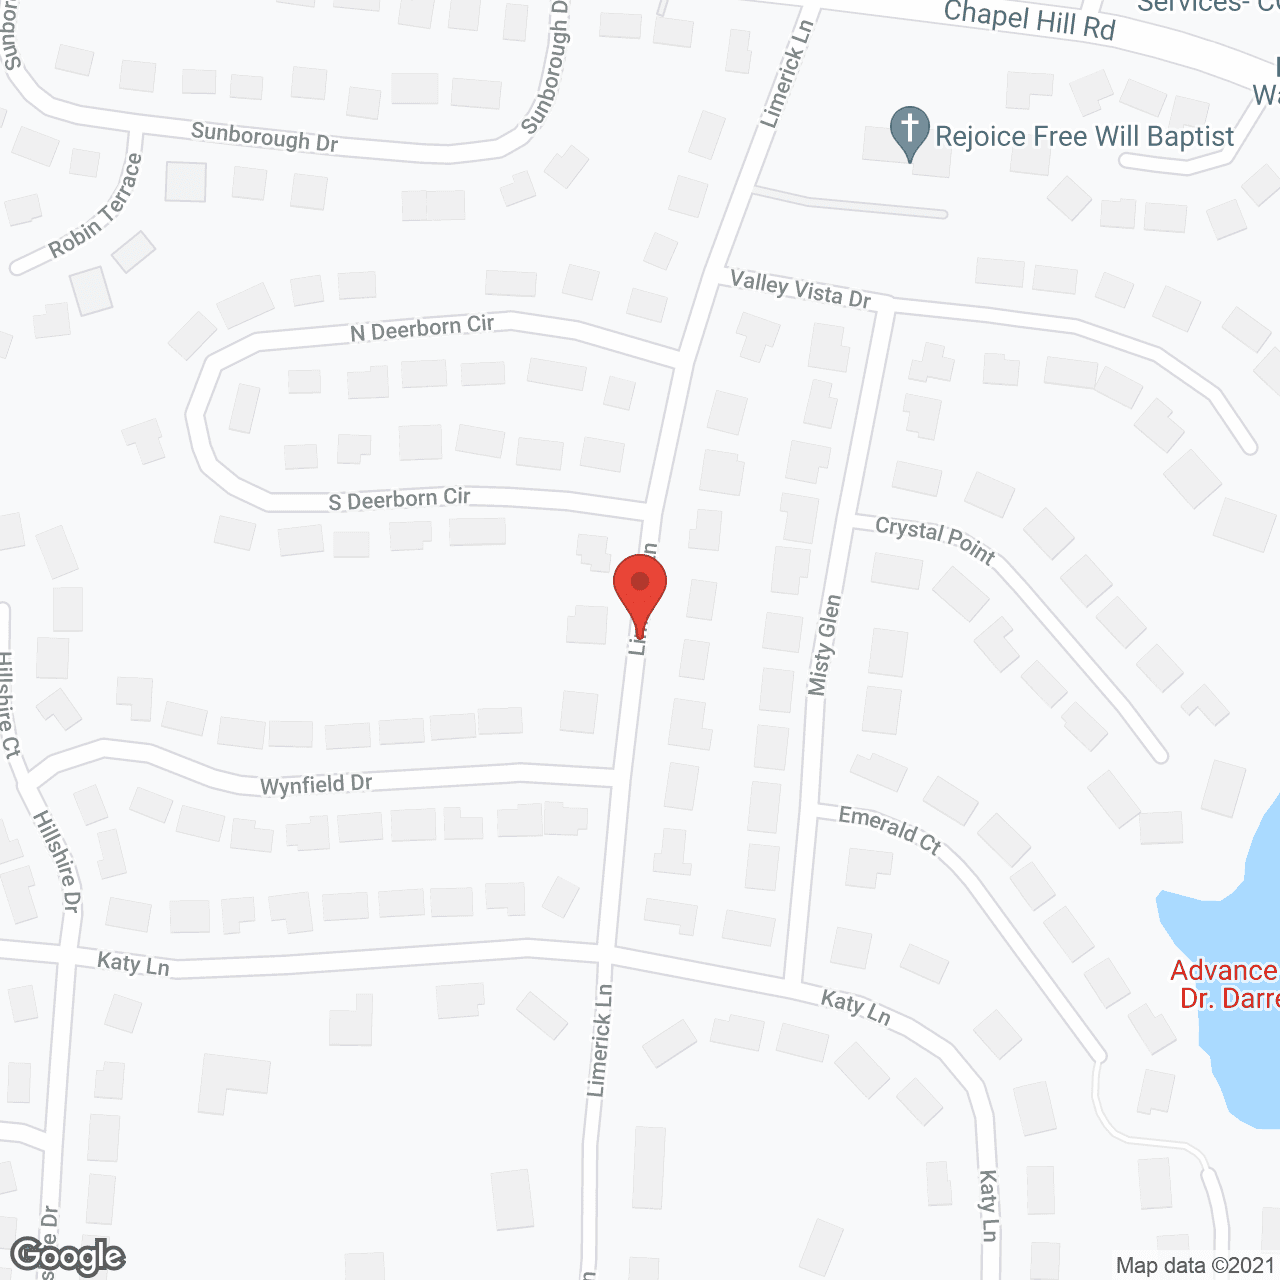 Cedarhurst of Columbia in google map